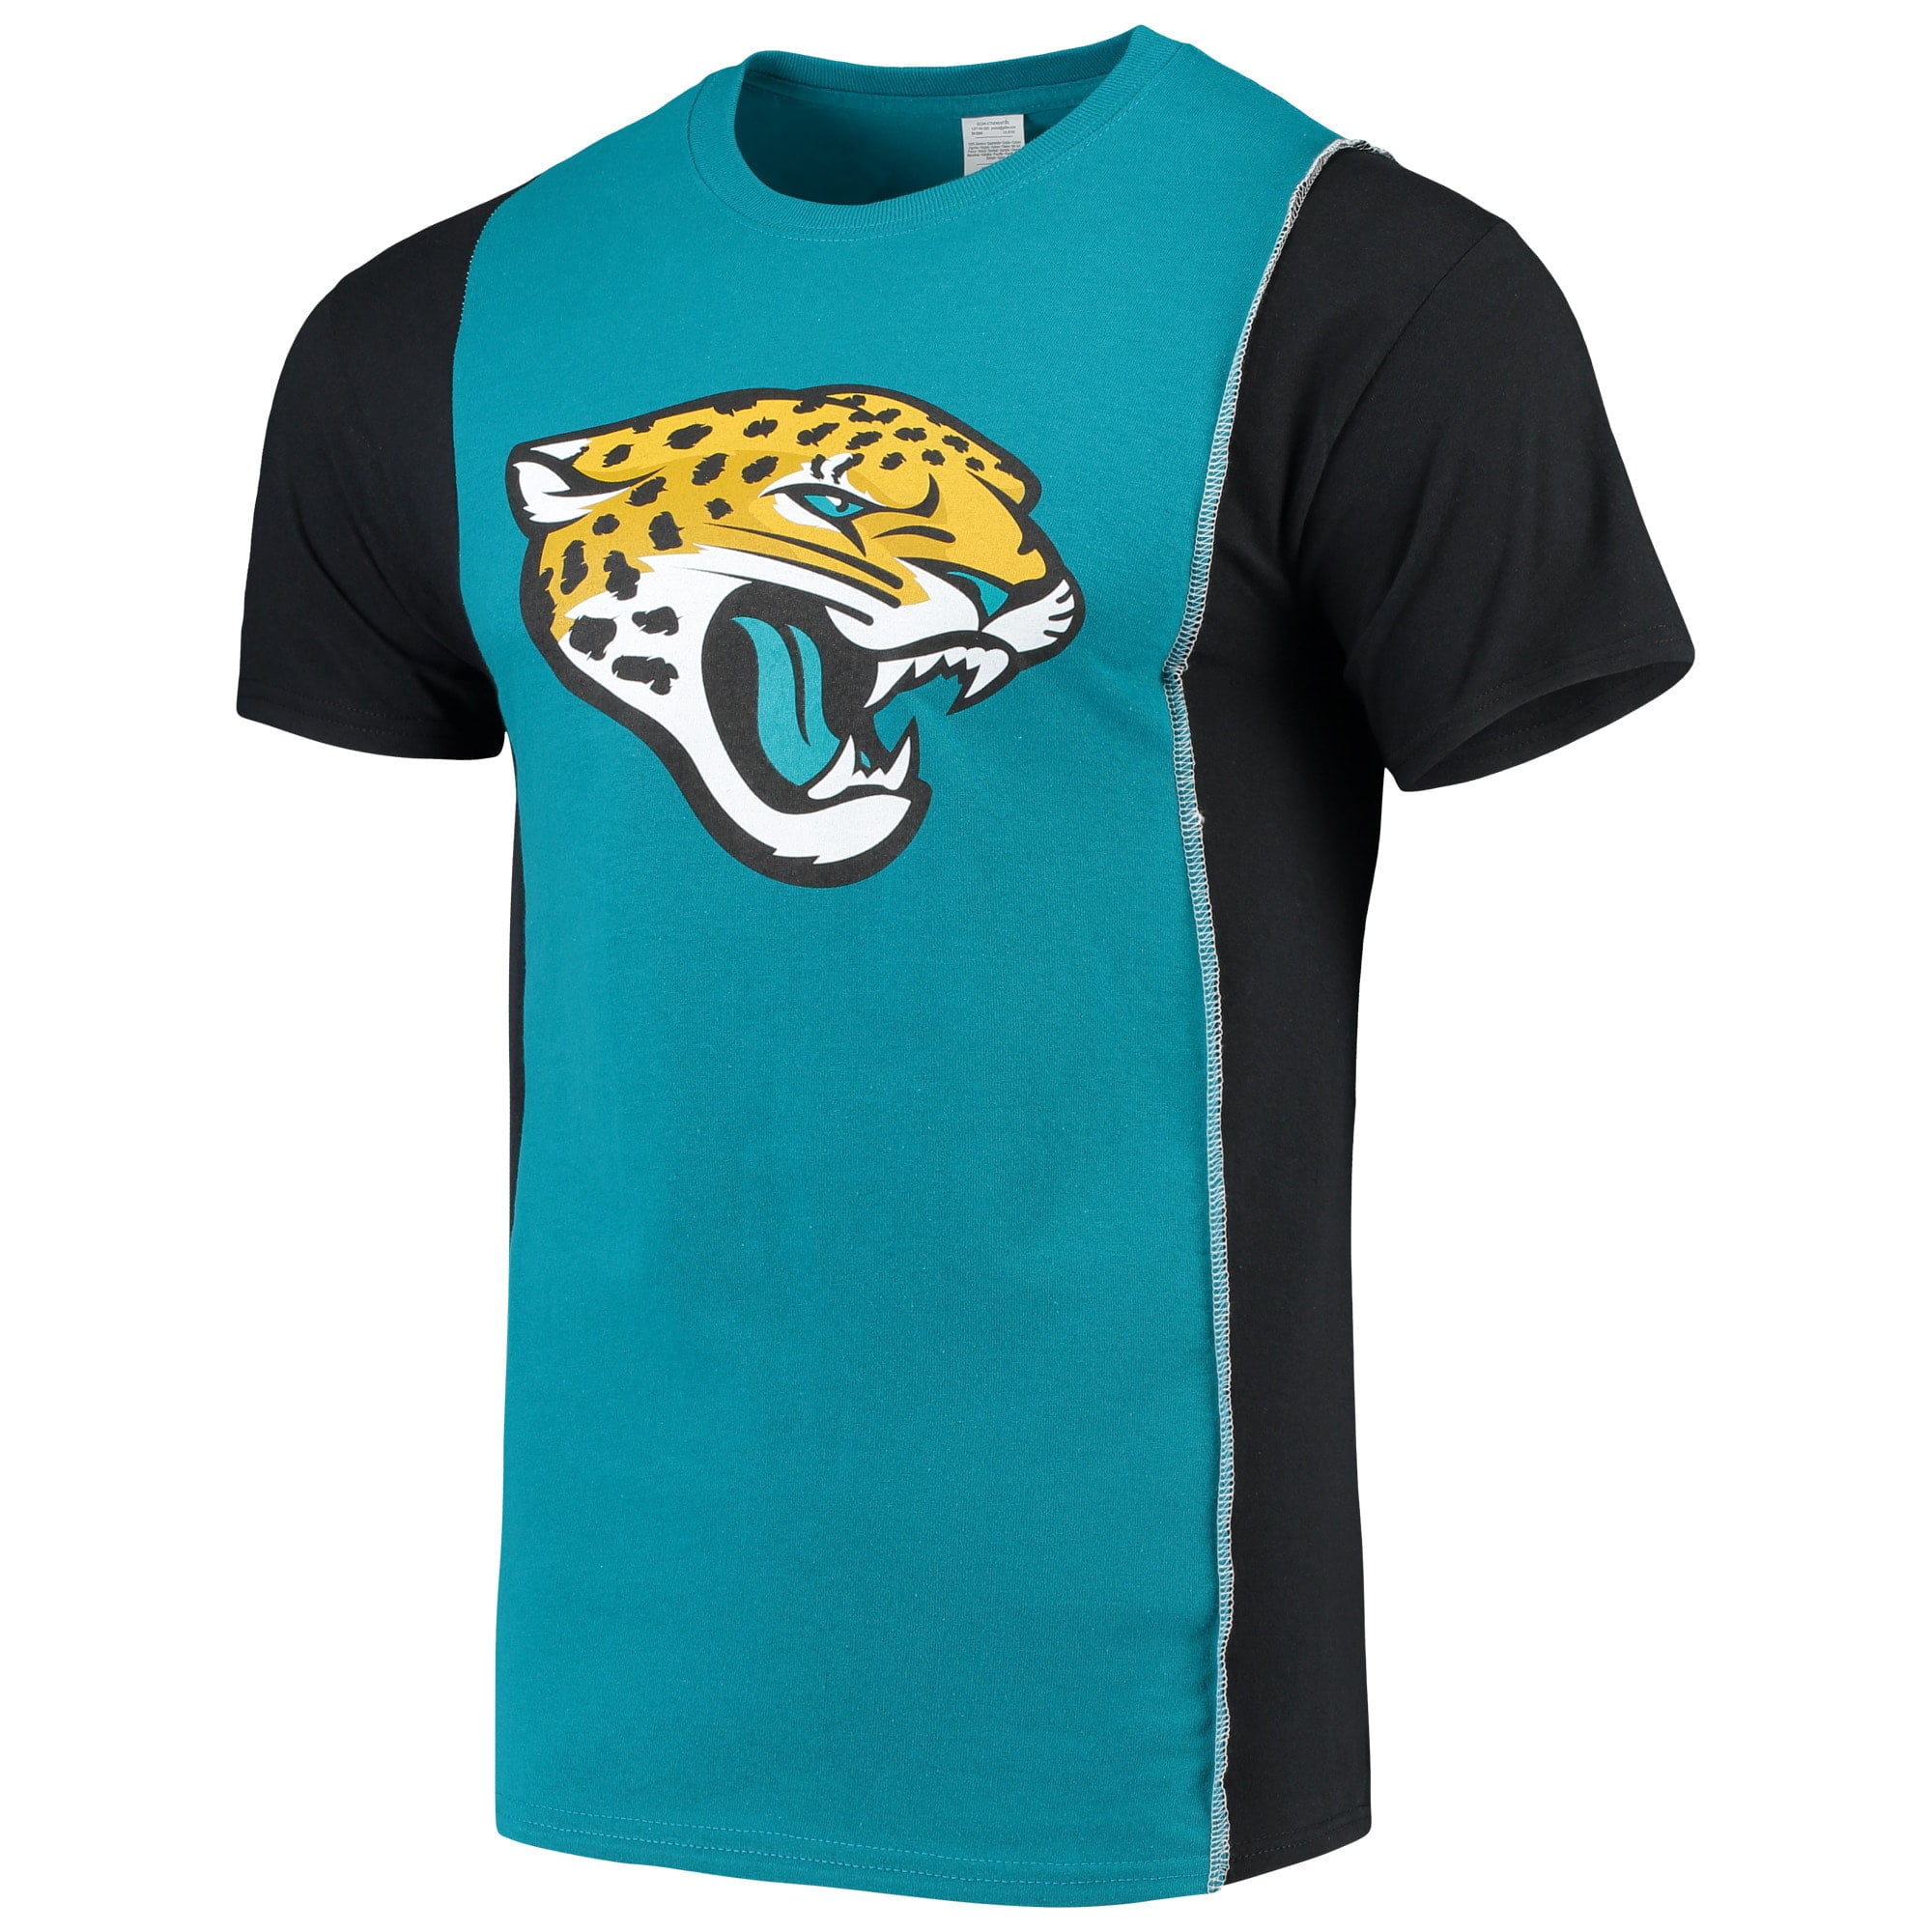 jacksonville jaguars apparel